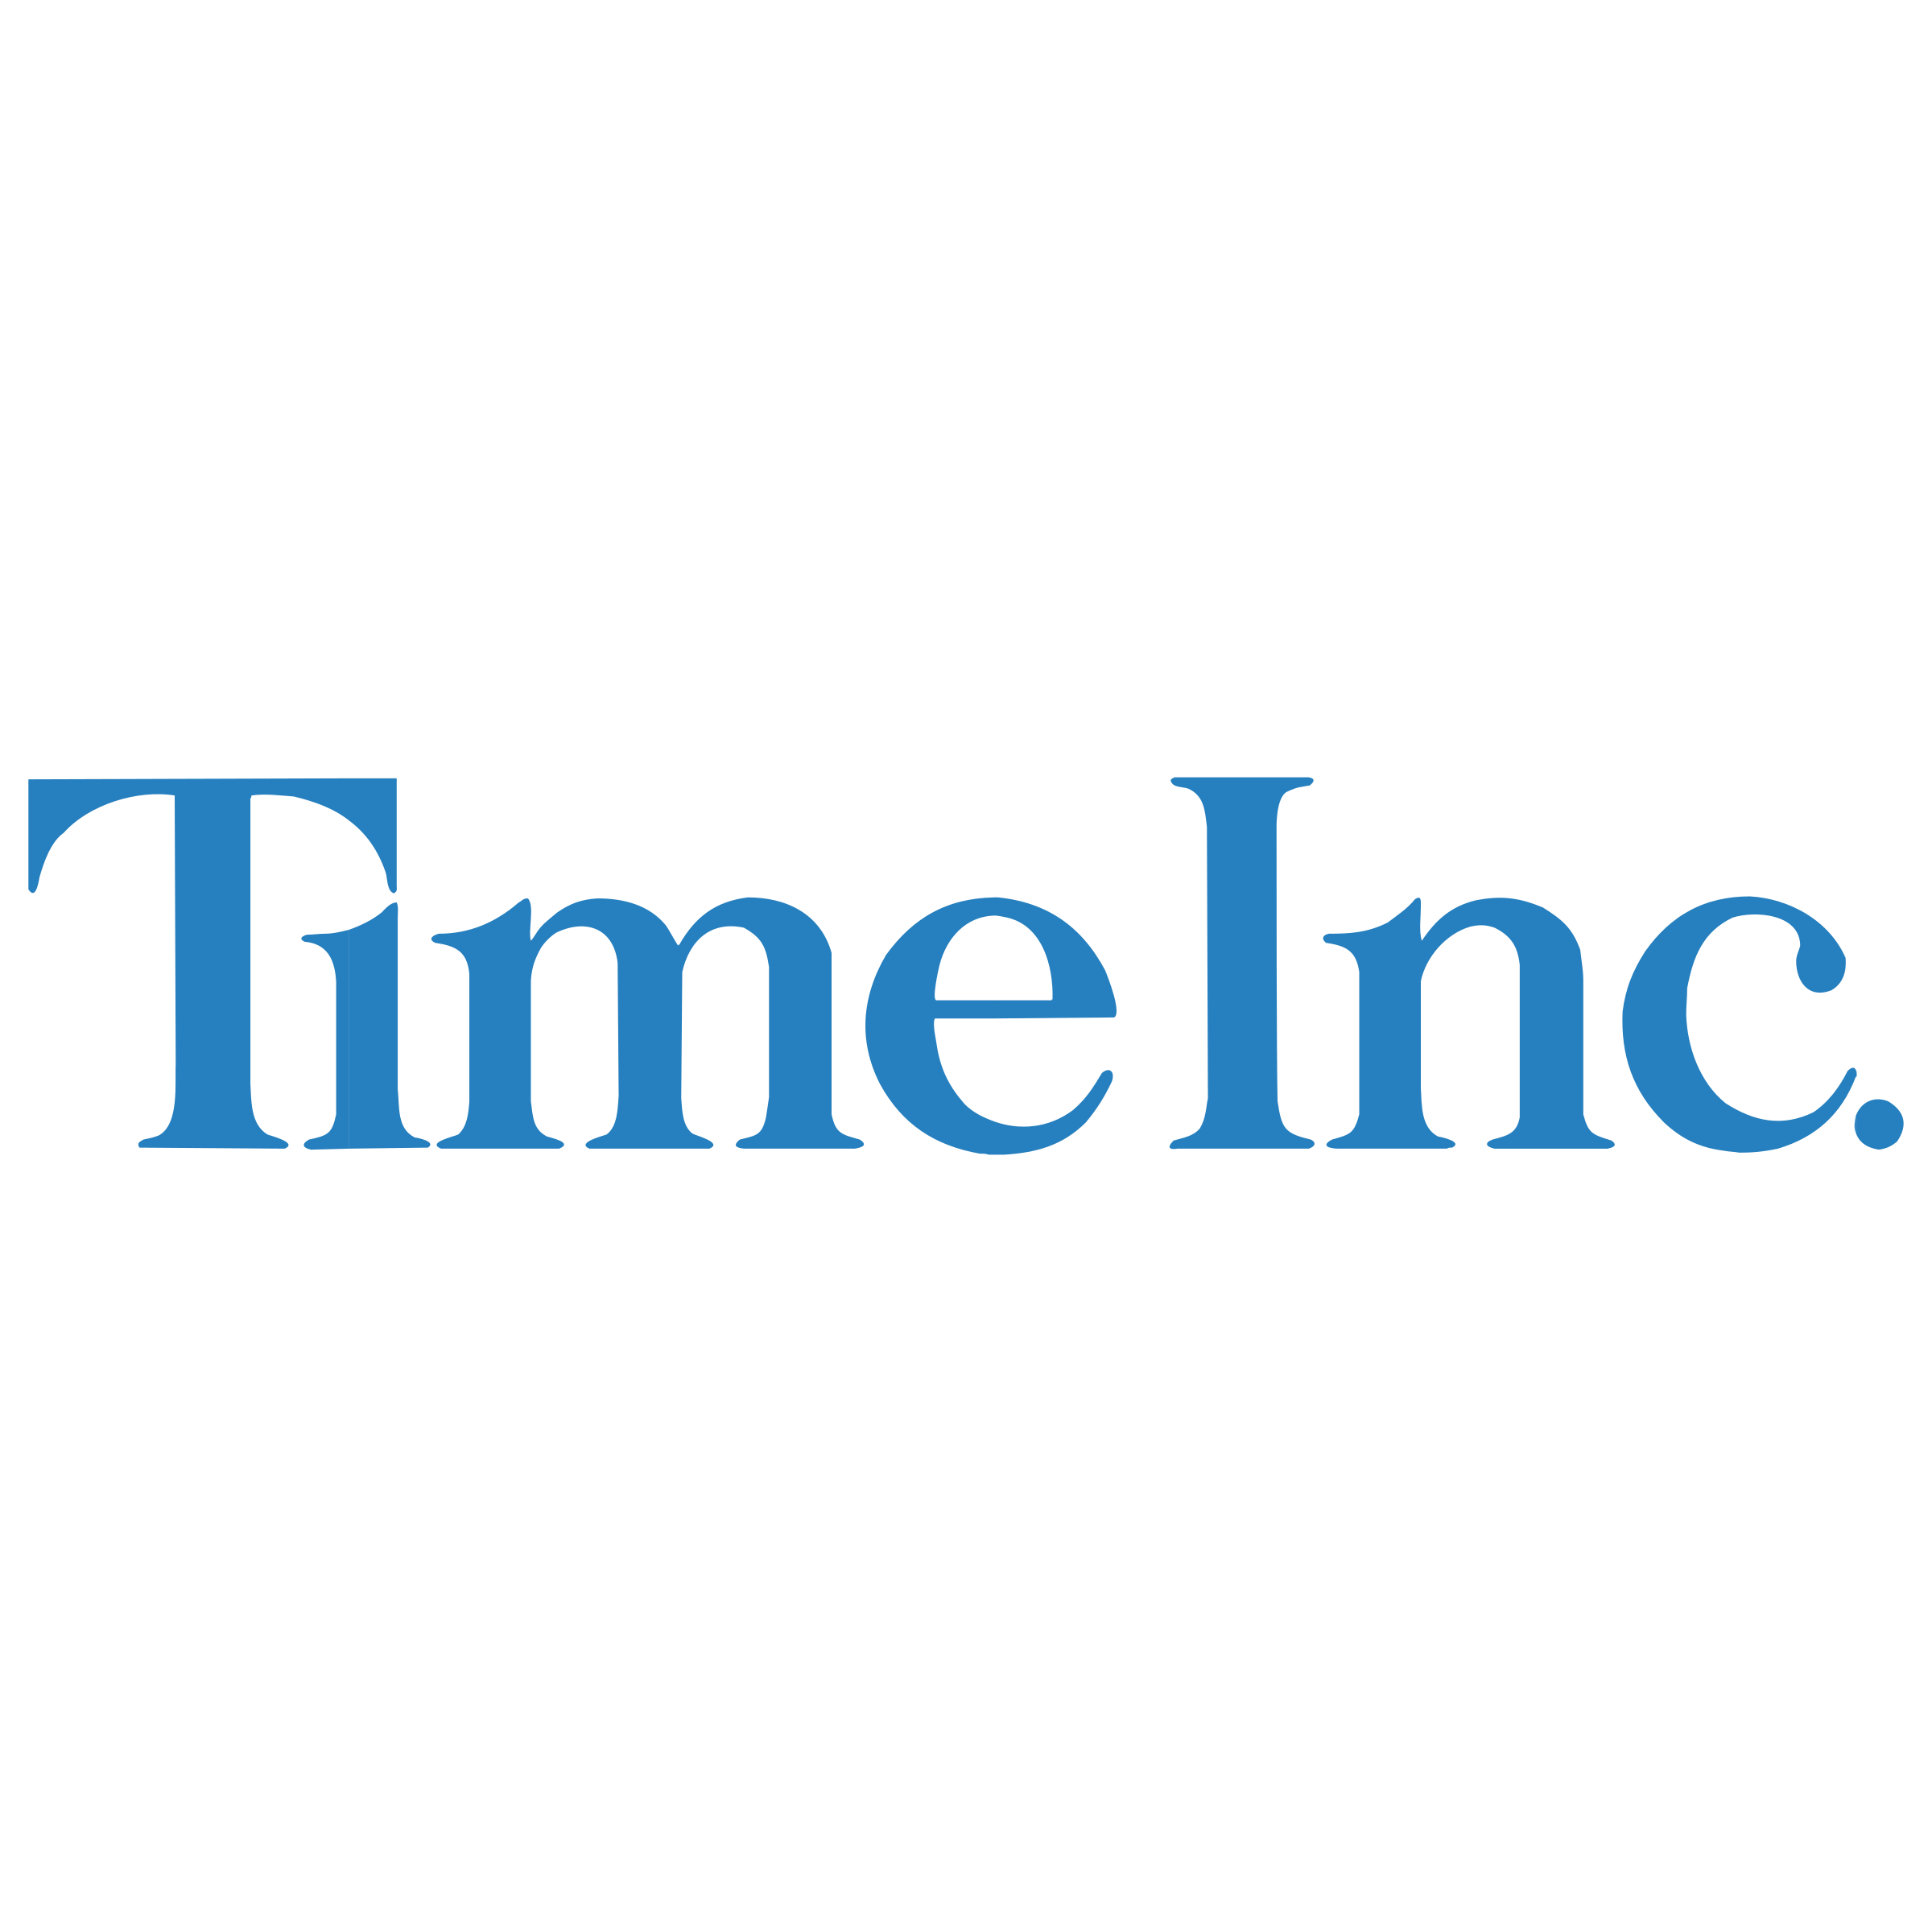 Time Inc. Логотип Inc. Time логотип. Tamer логотип.